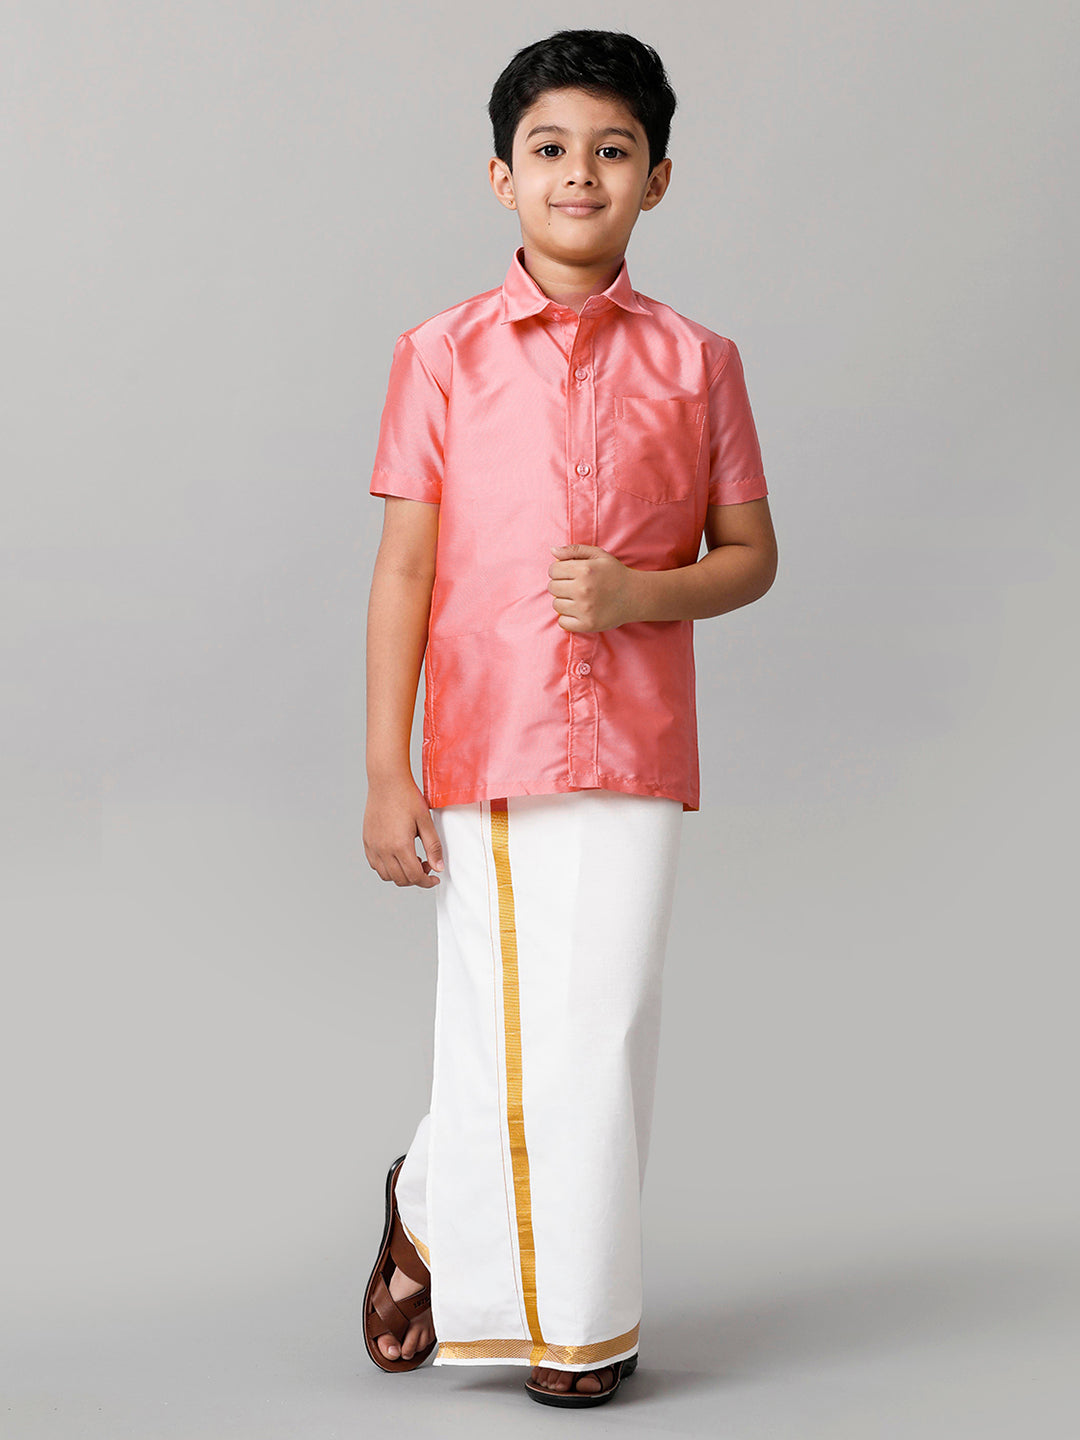 Boys Silk Cotton Pink Half Sleeves Shirt K45-Full view